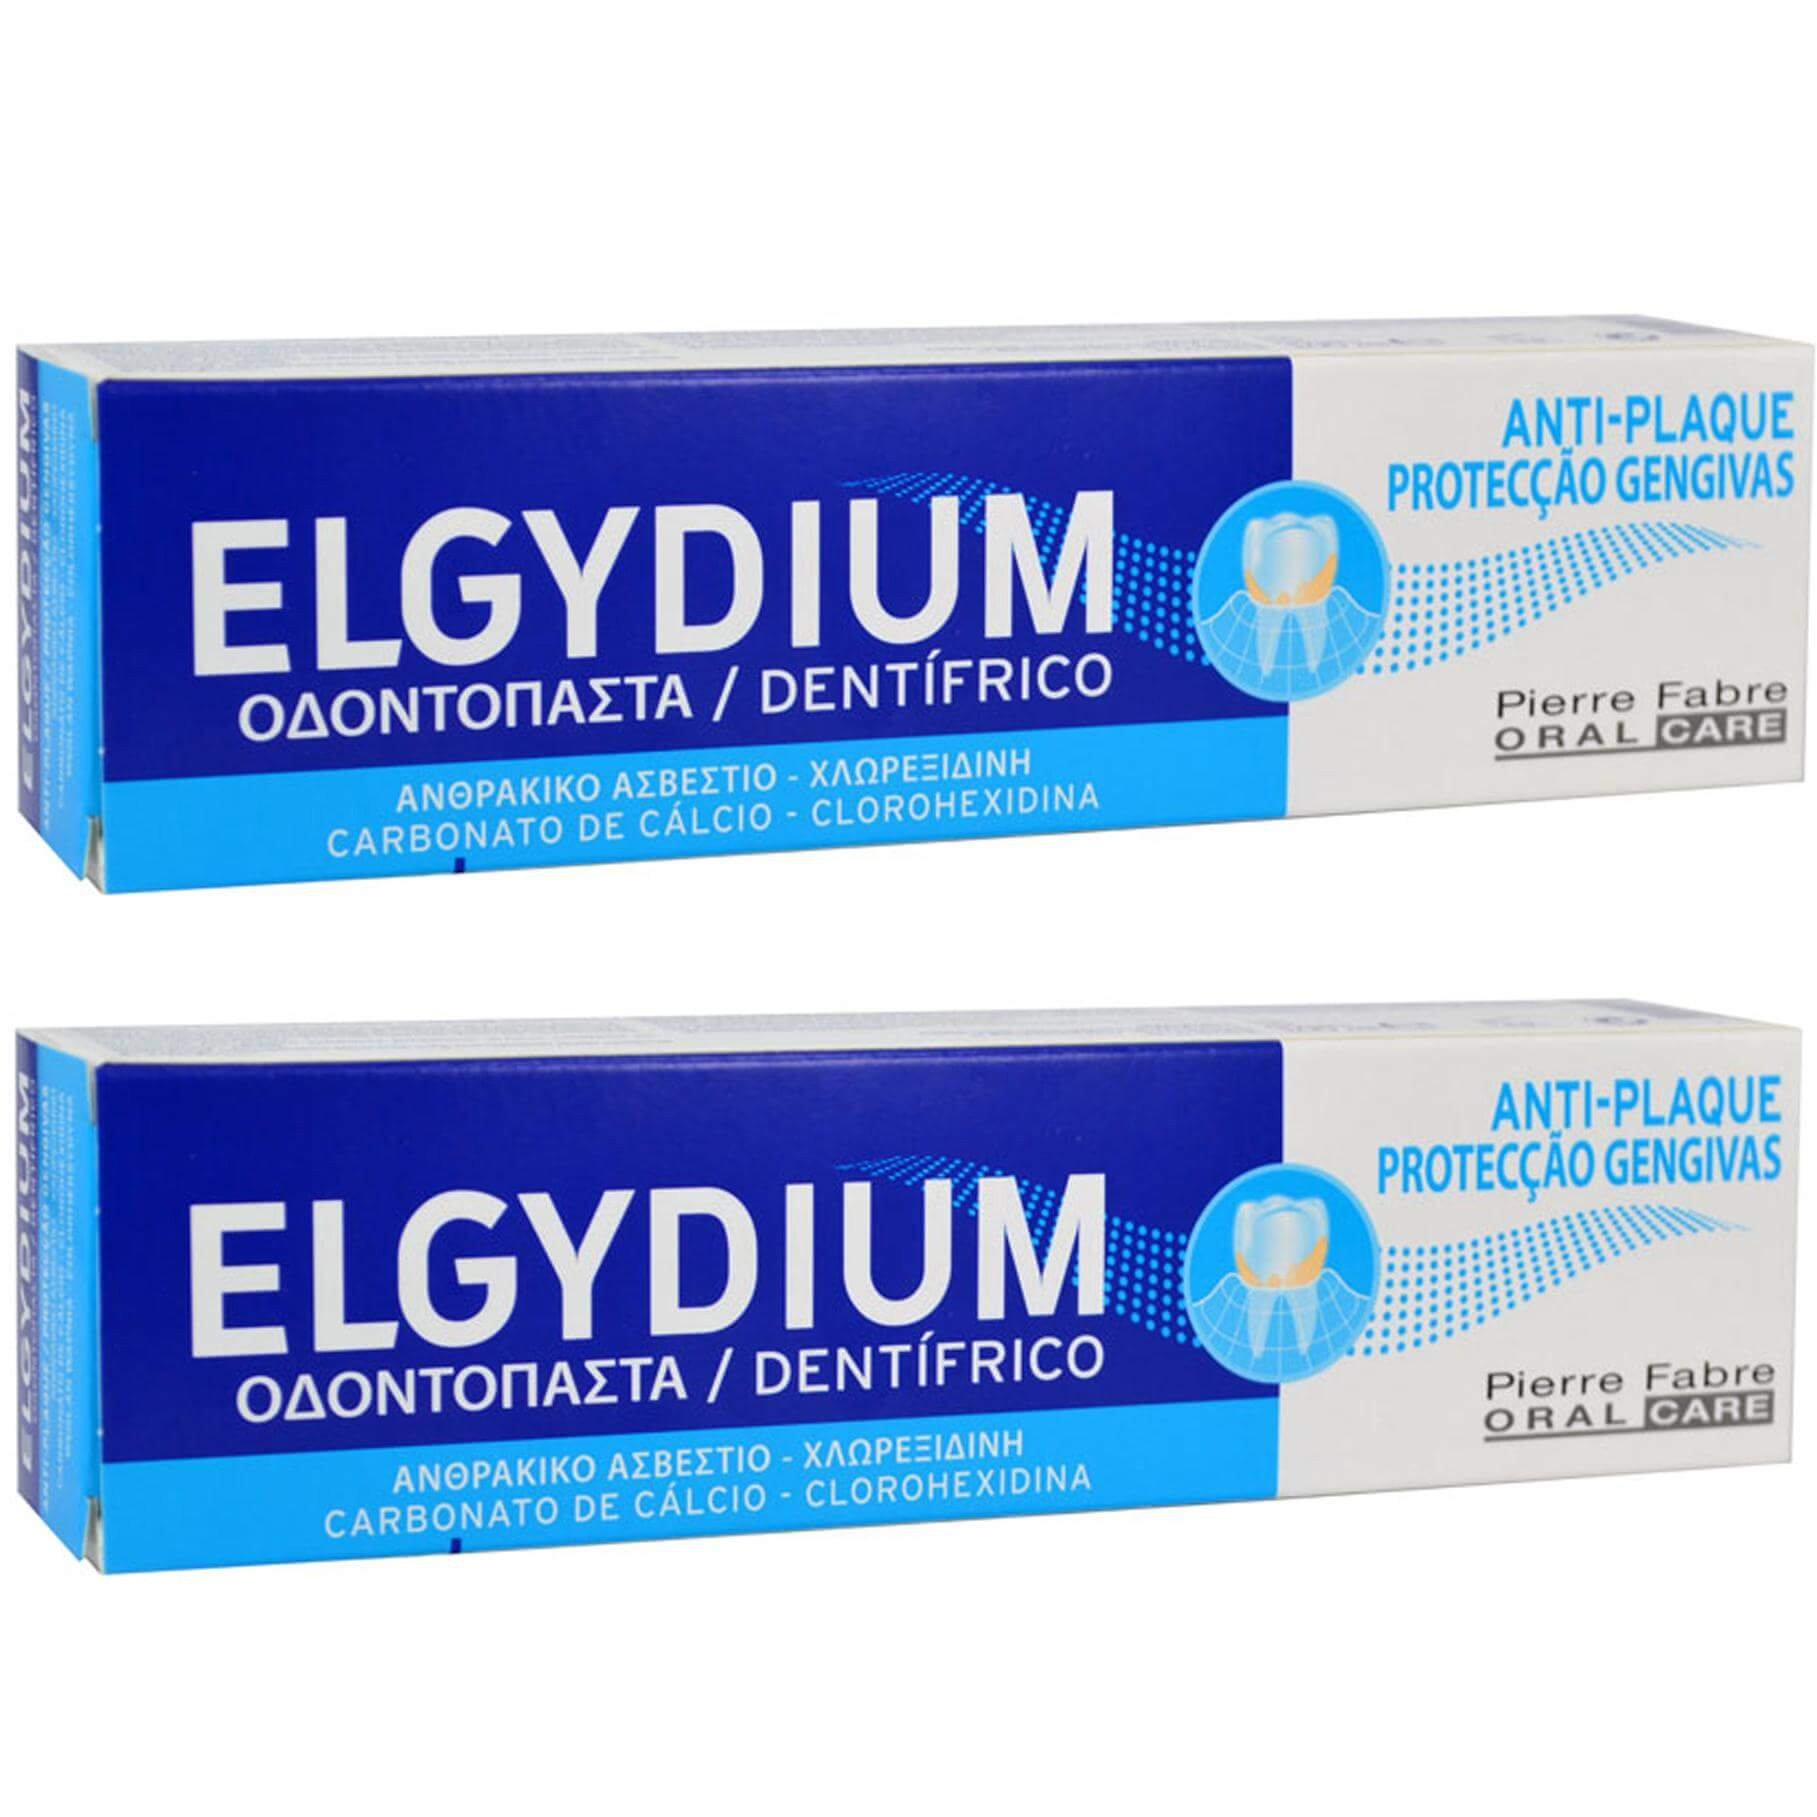 Elgydium Antiplaque Πακέτο Προσφοράς Οδοντόκρεμα Κατά της Οδοντικής Πλάκας με -50% στο 2ο Προϊόν 2 x 100ml